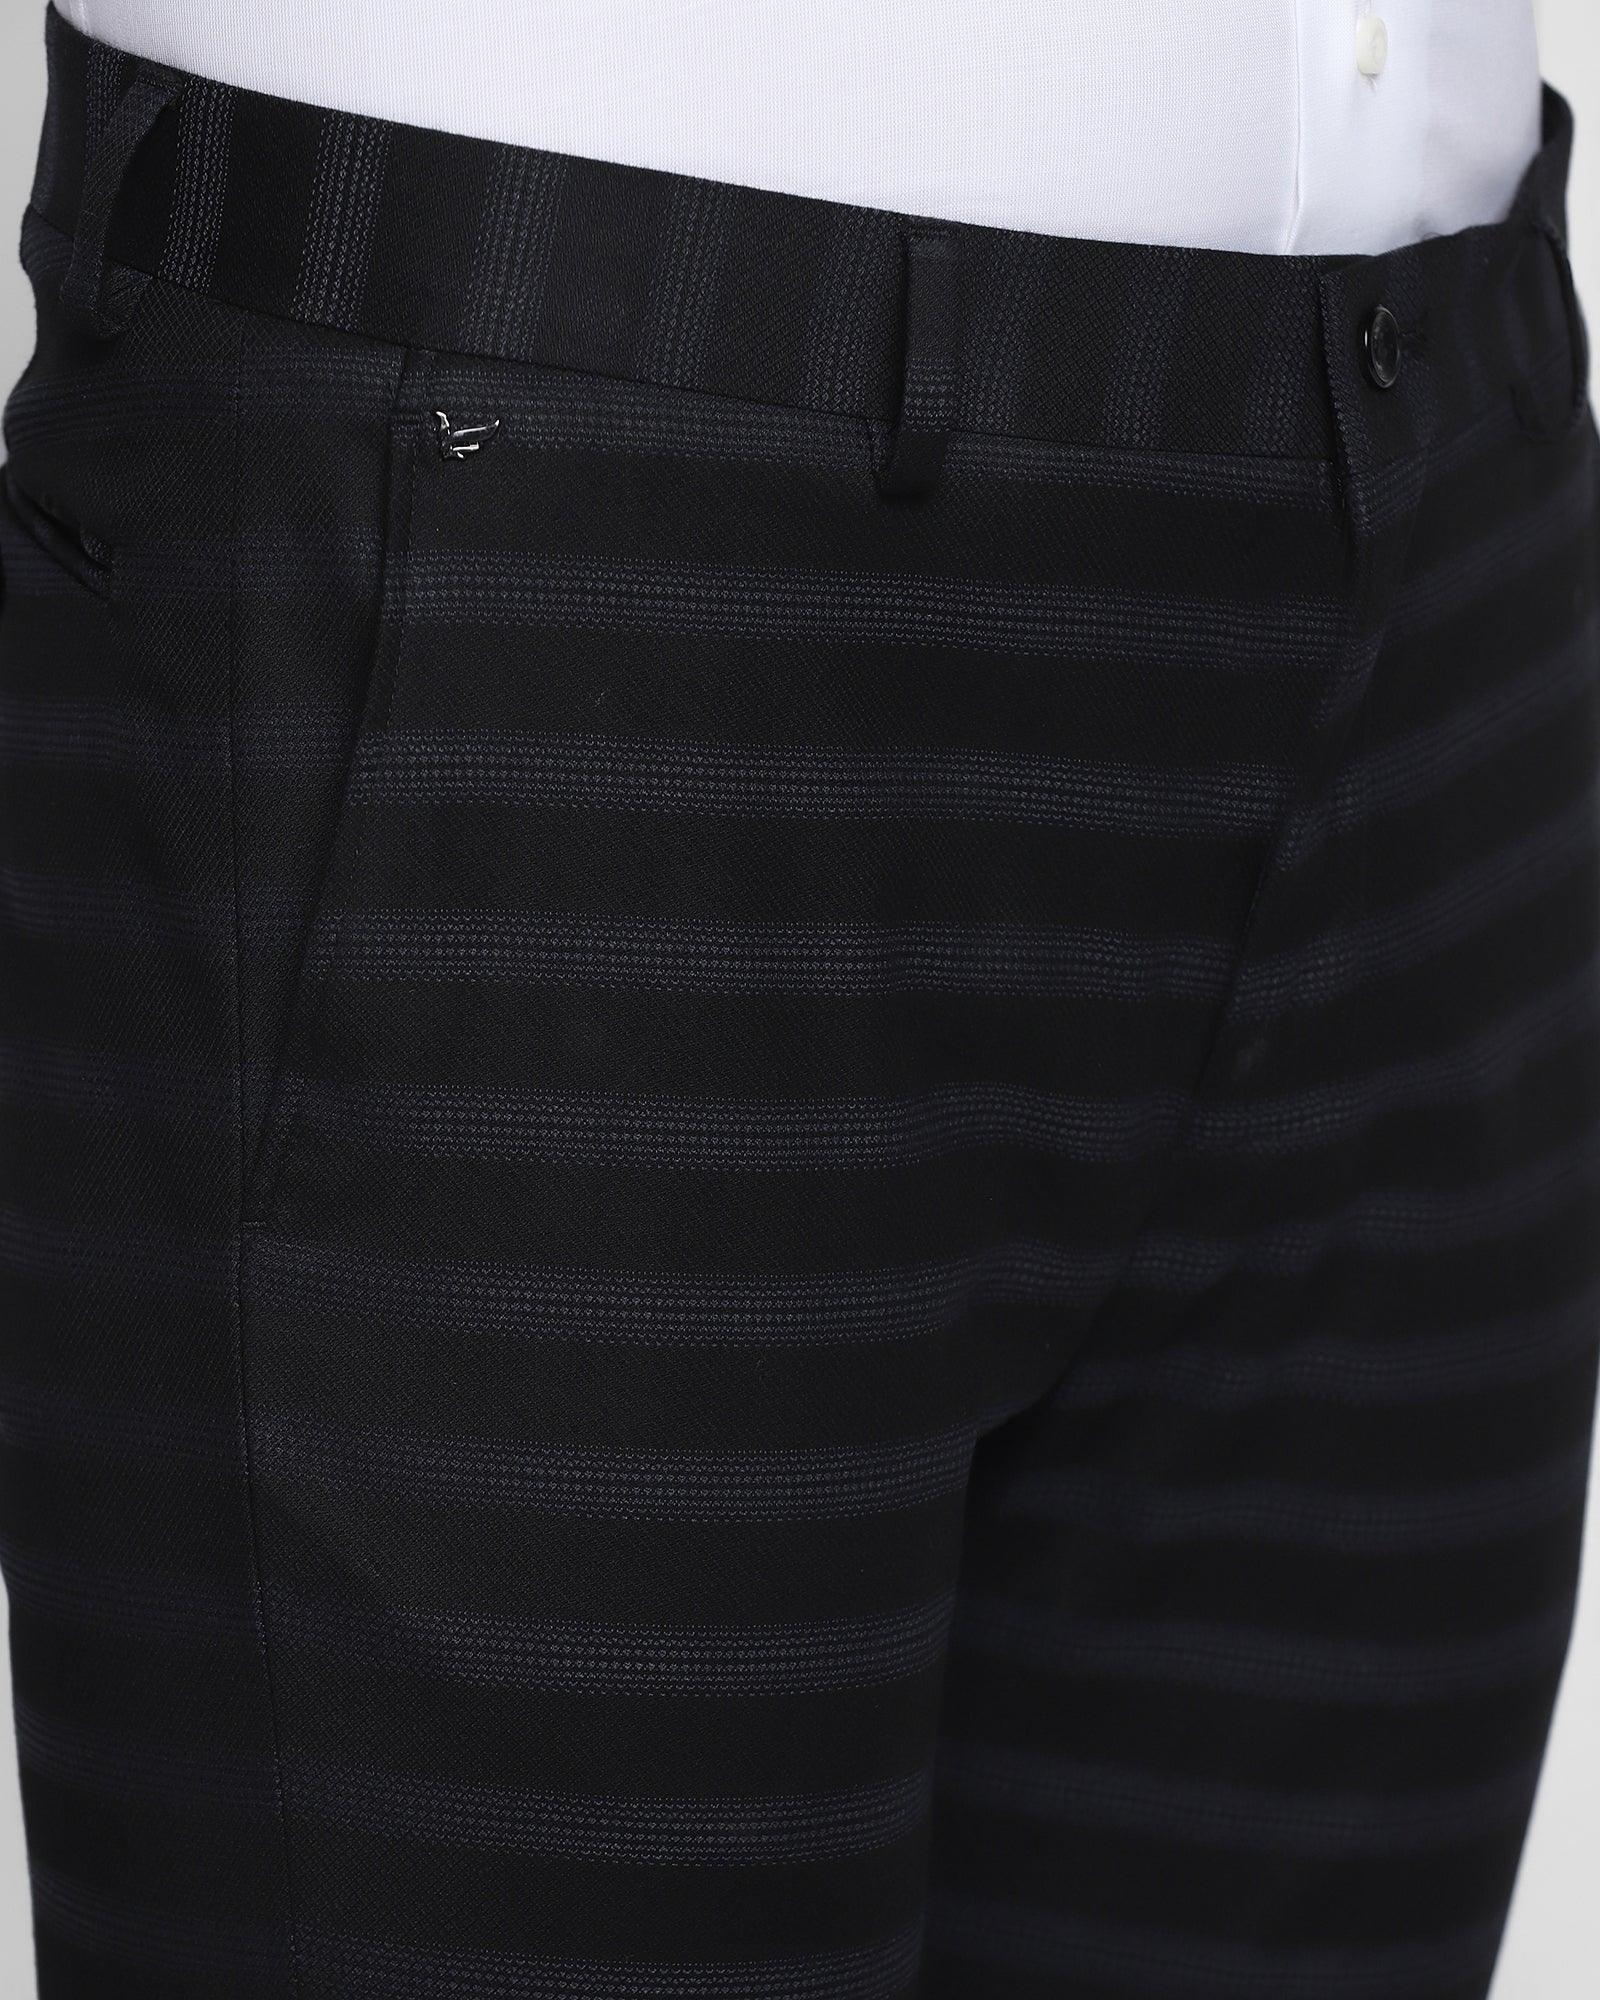 Slim Fit B-91 Formal Black Striped Trouser - Modek